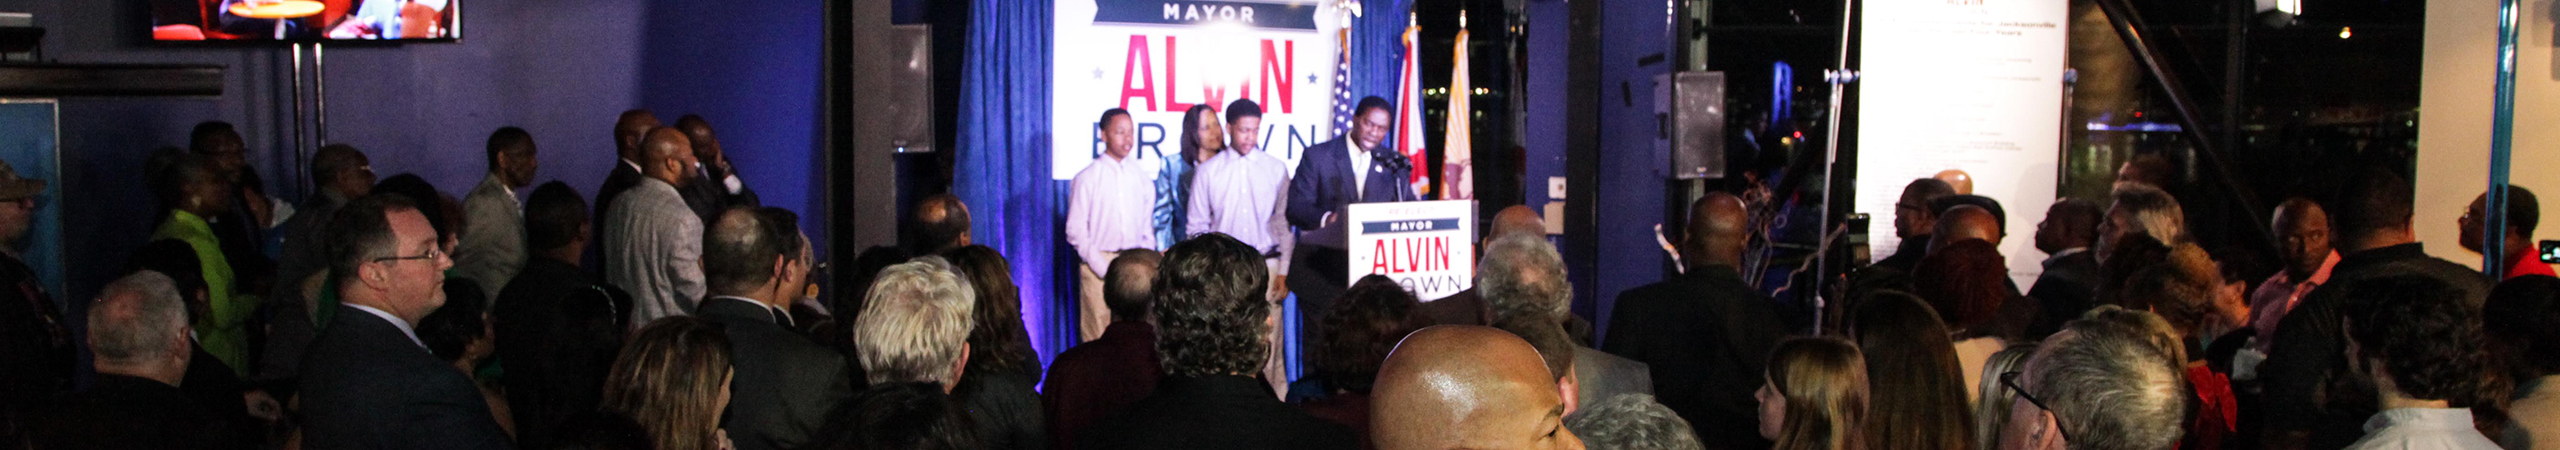 Mayor Alvin Brown Campaign Party